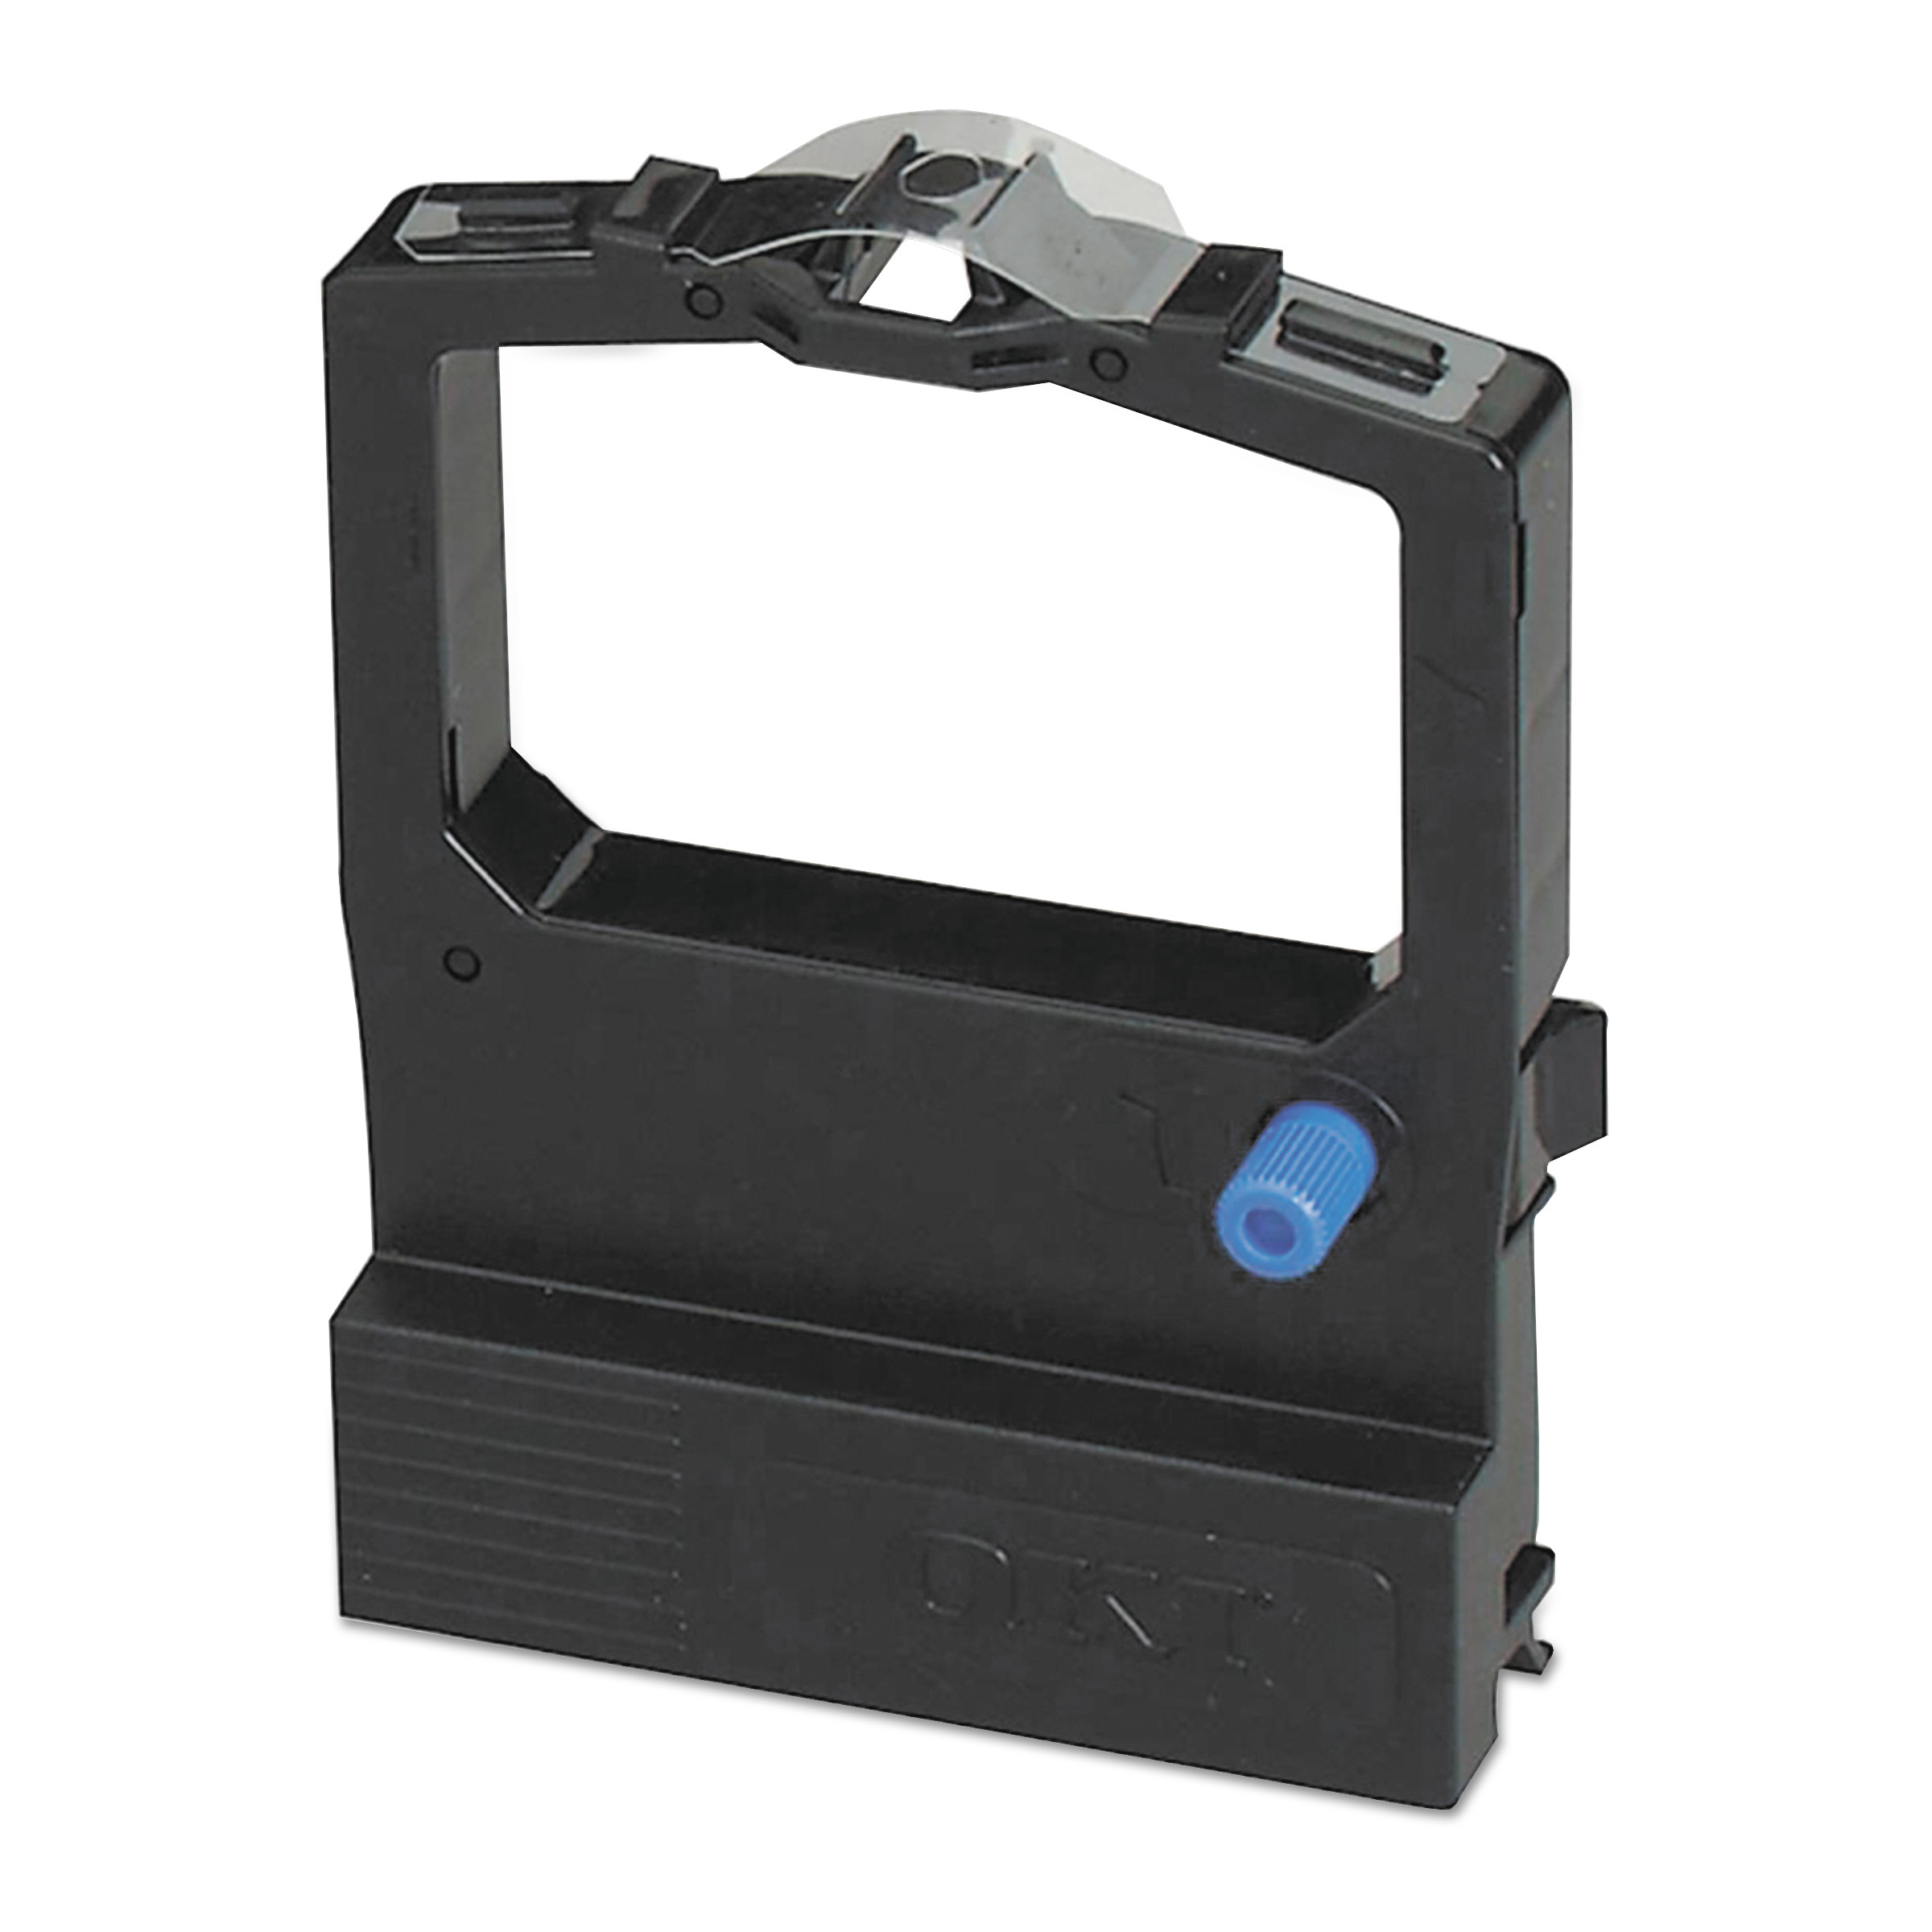  Innovera AC-O0520 52107001 Compatible OKI Printer Ribbon, Black (IVR52107001) 